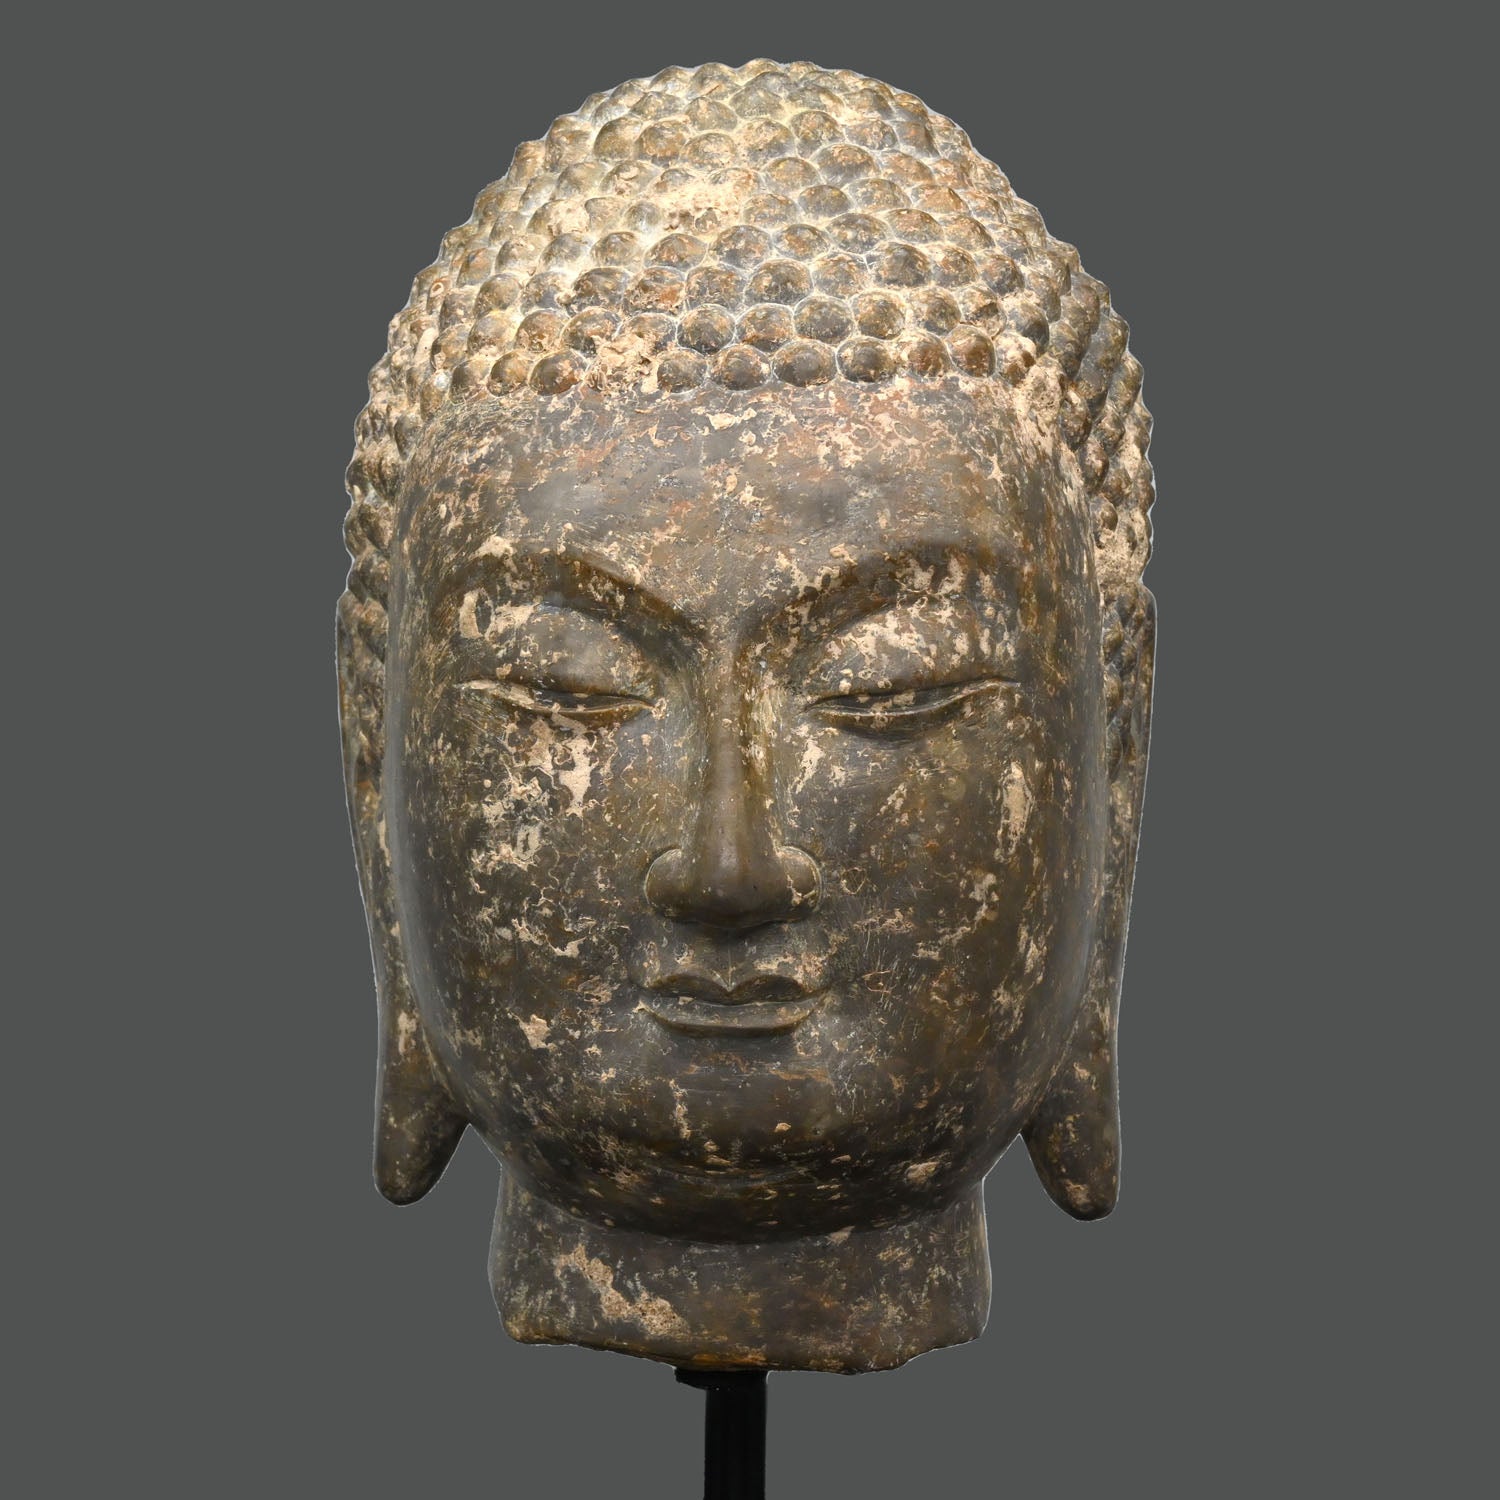 A Chinese Grey Limestone Head of a Buddha, Shandong Province, Northern Qi dynasty, ca. 550 - 577 CE